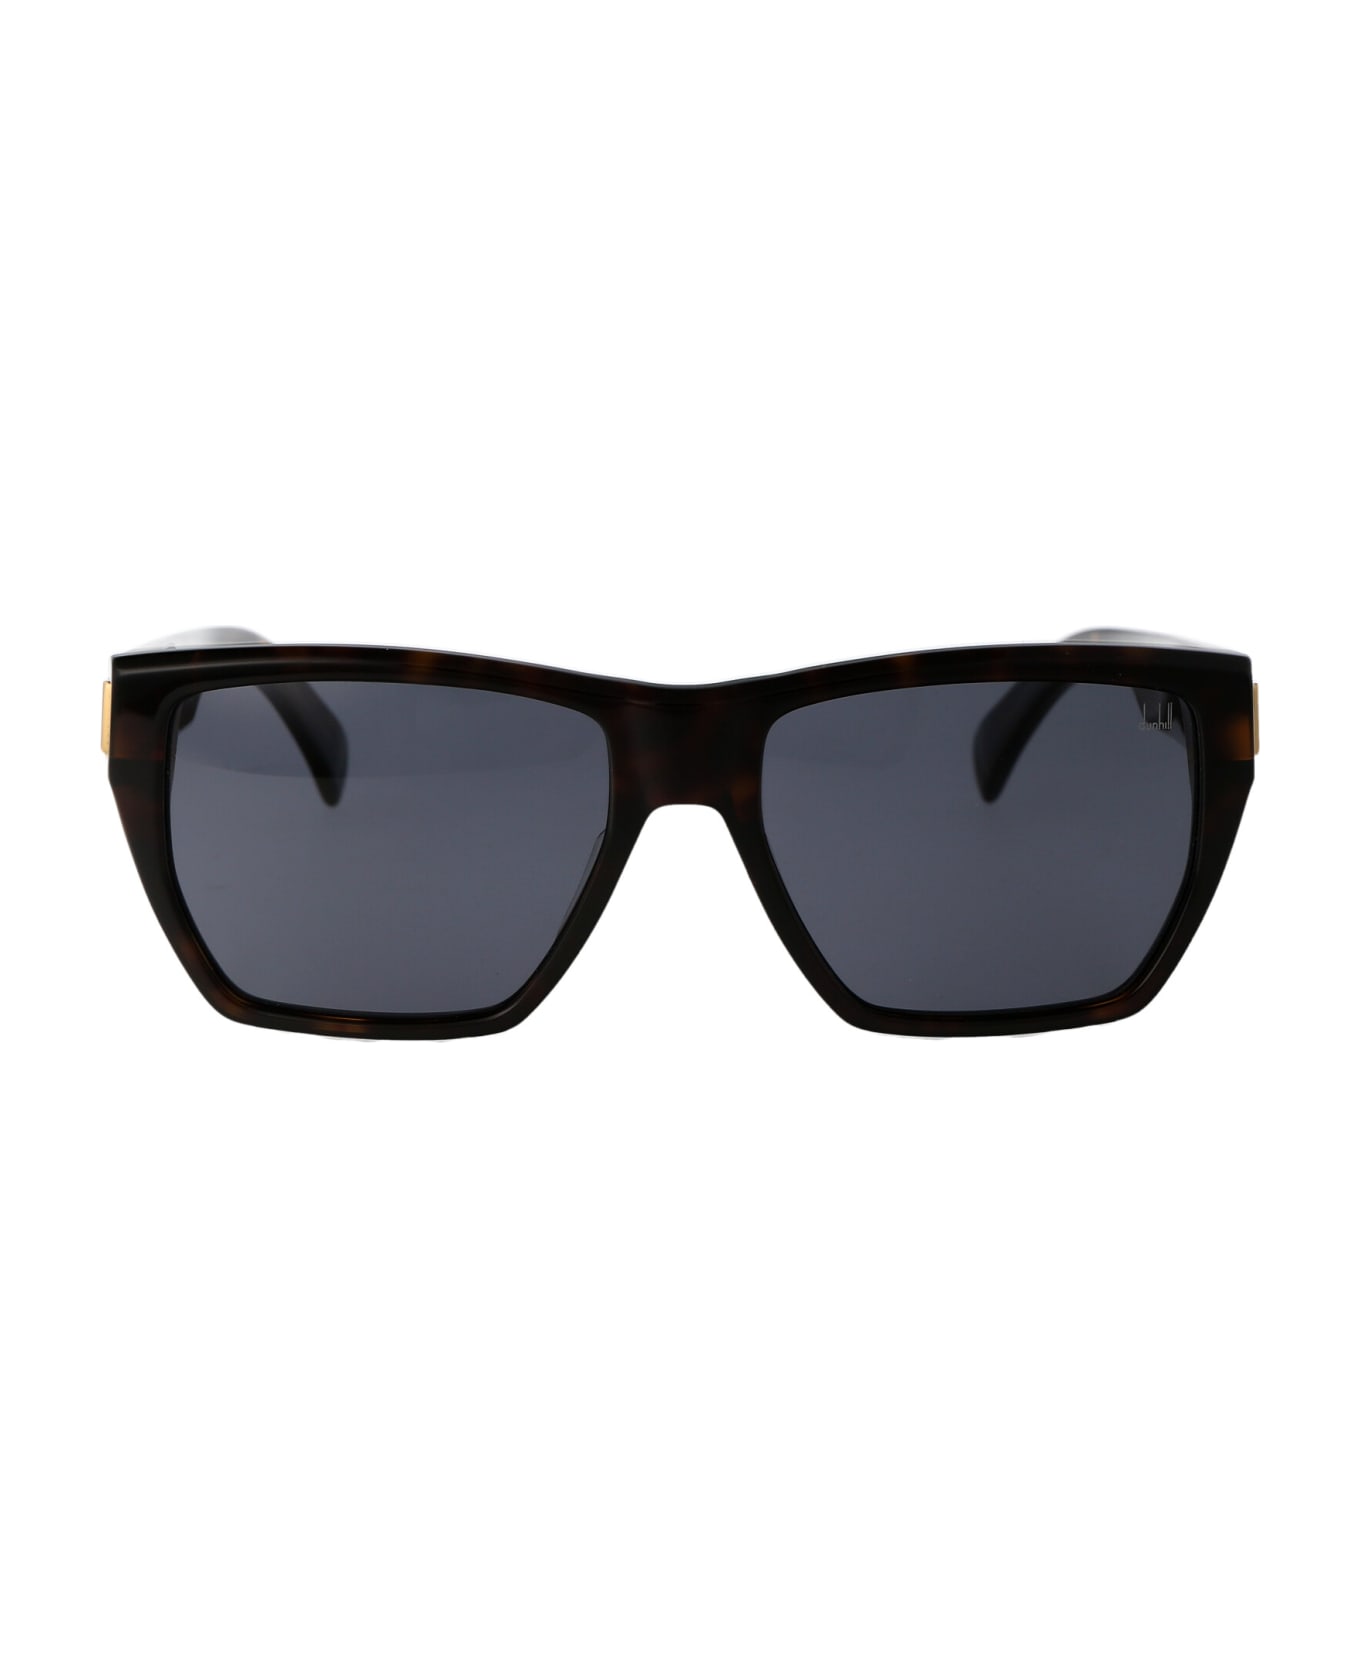 Dunhill Du0031s Sunglasses - 004 RAF BLK-FS Sunglasses